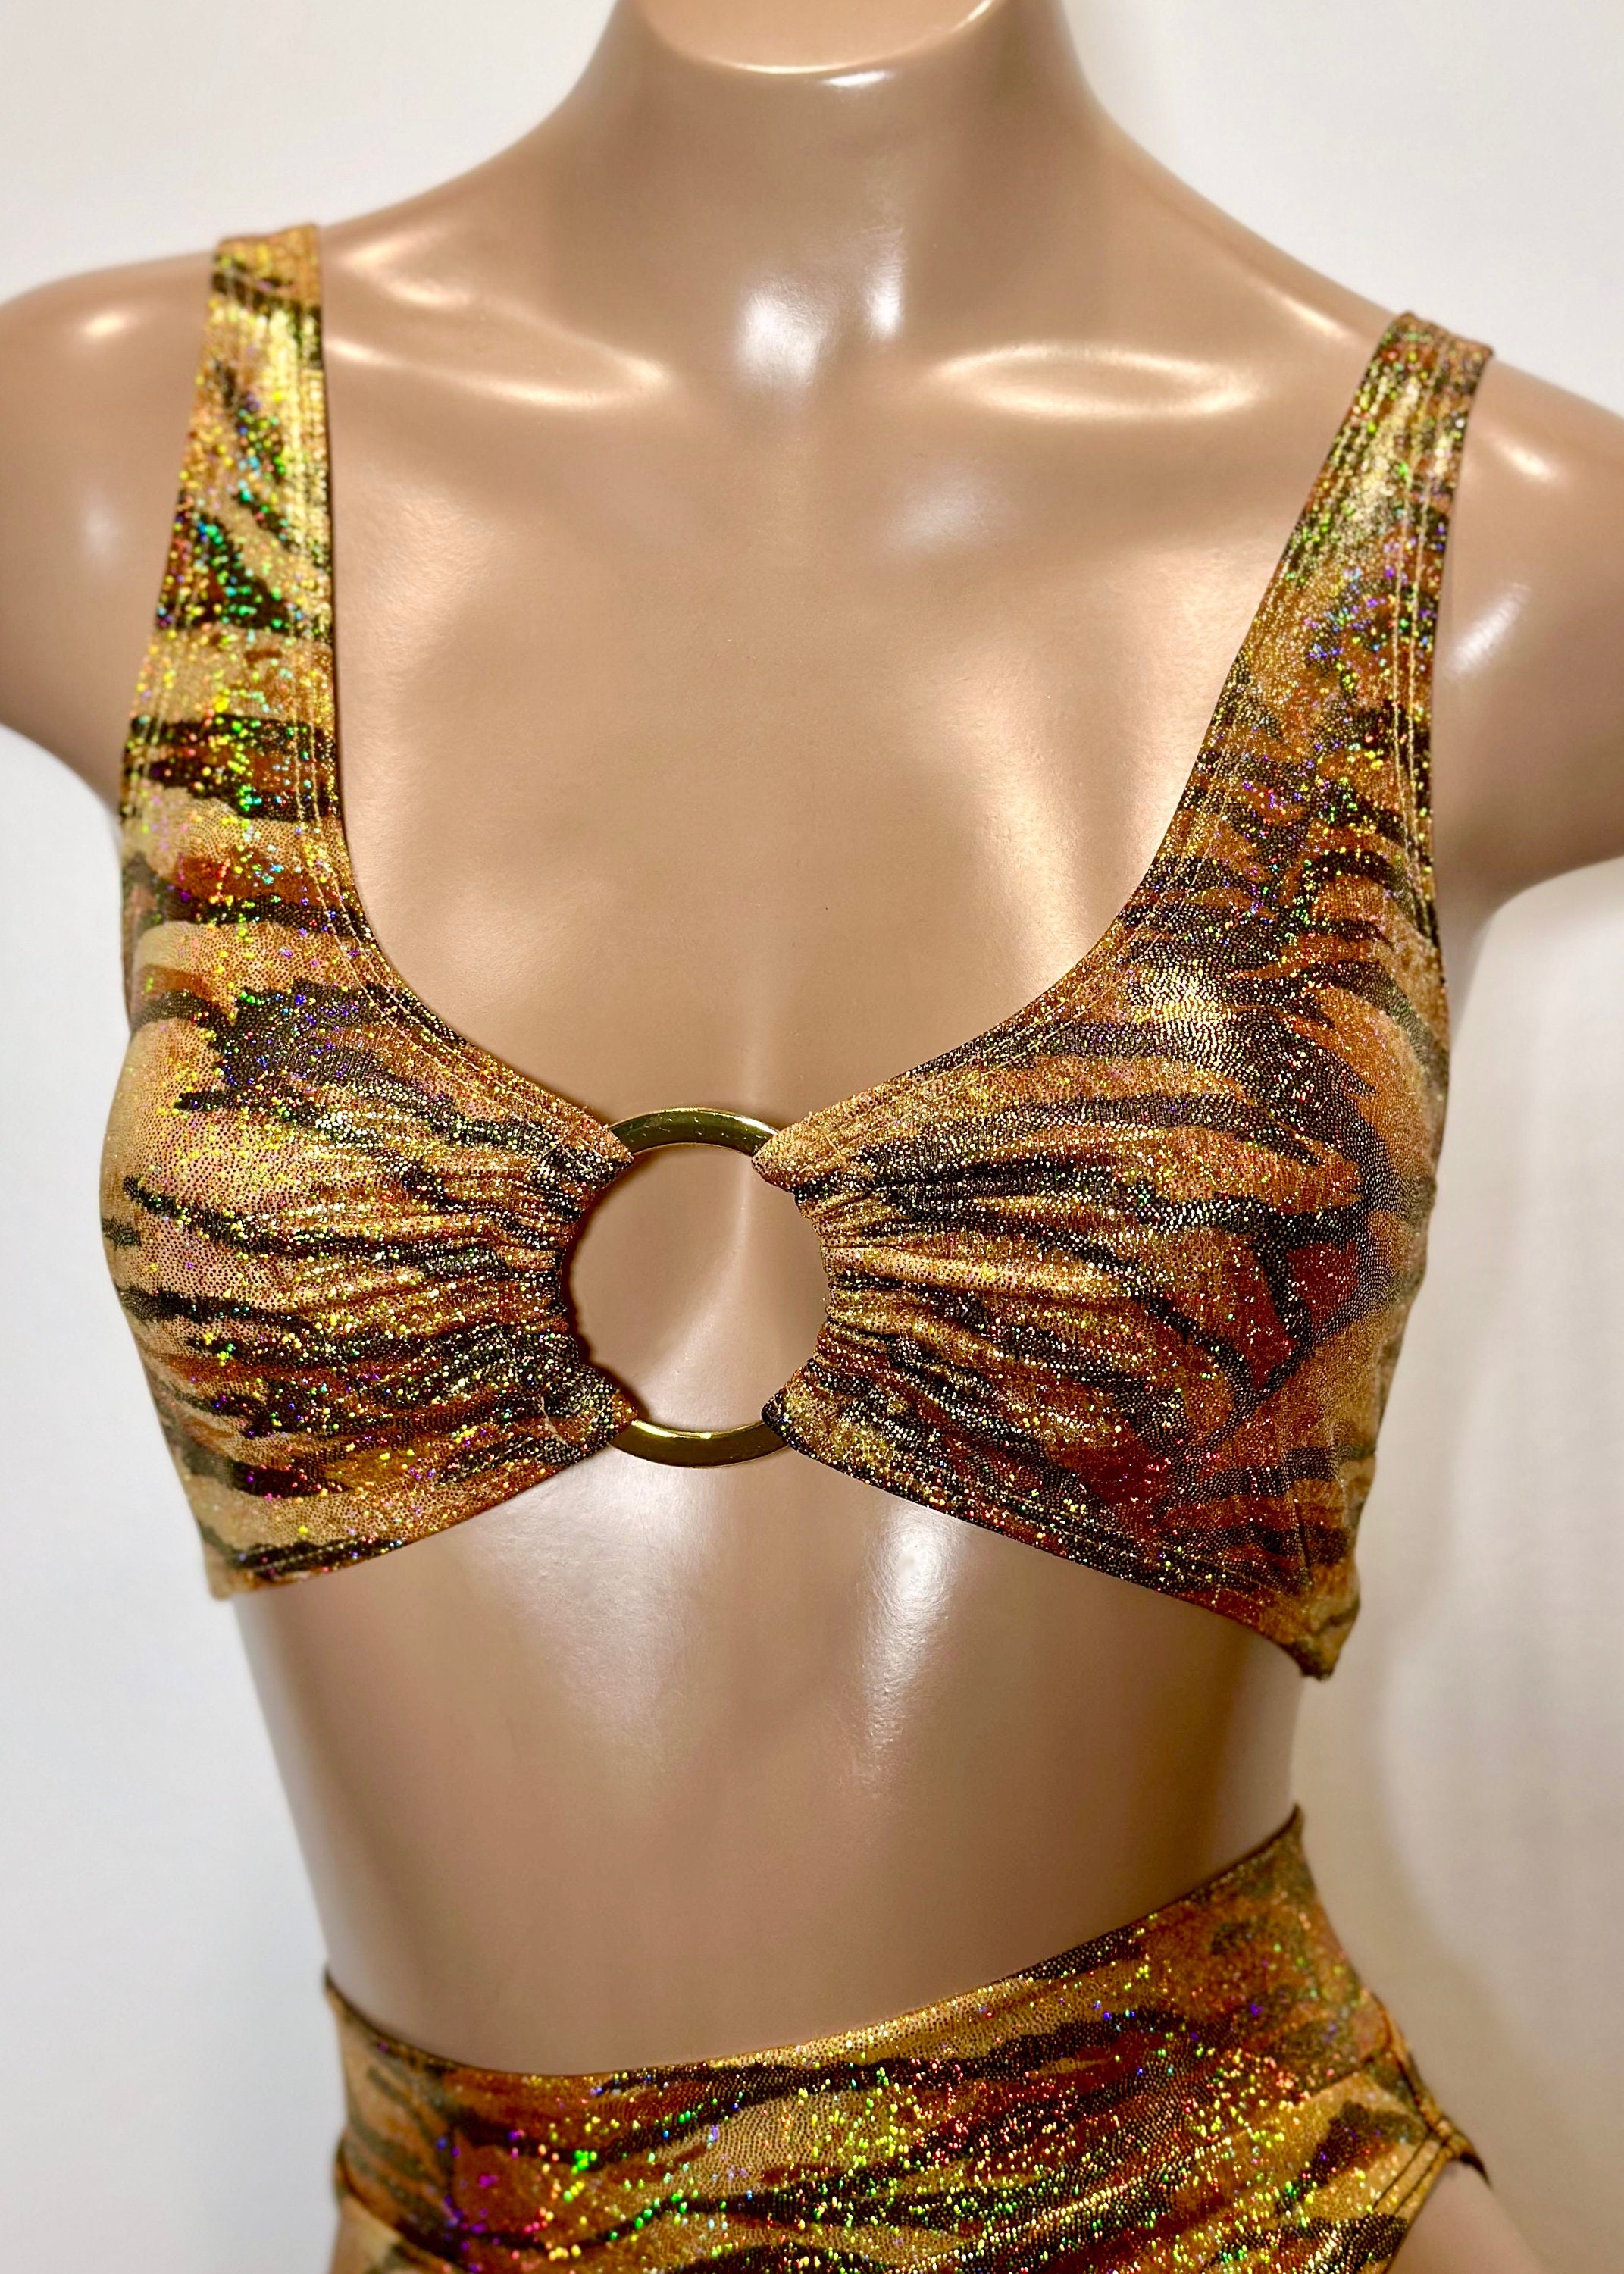 Benivogue Tiger Print Women Bikni Lingerie Set, Blended Cotton Free Size  Bikini Set with Adjustable Straps (Fit for 30-40)